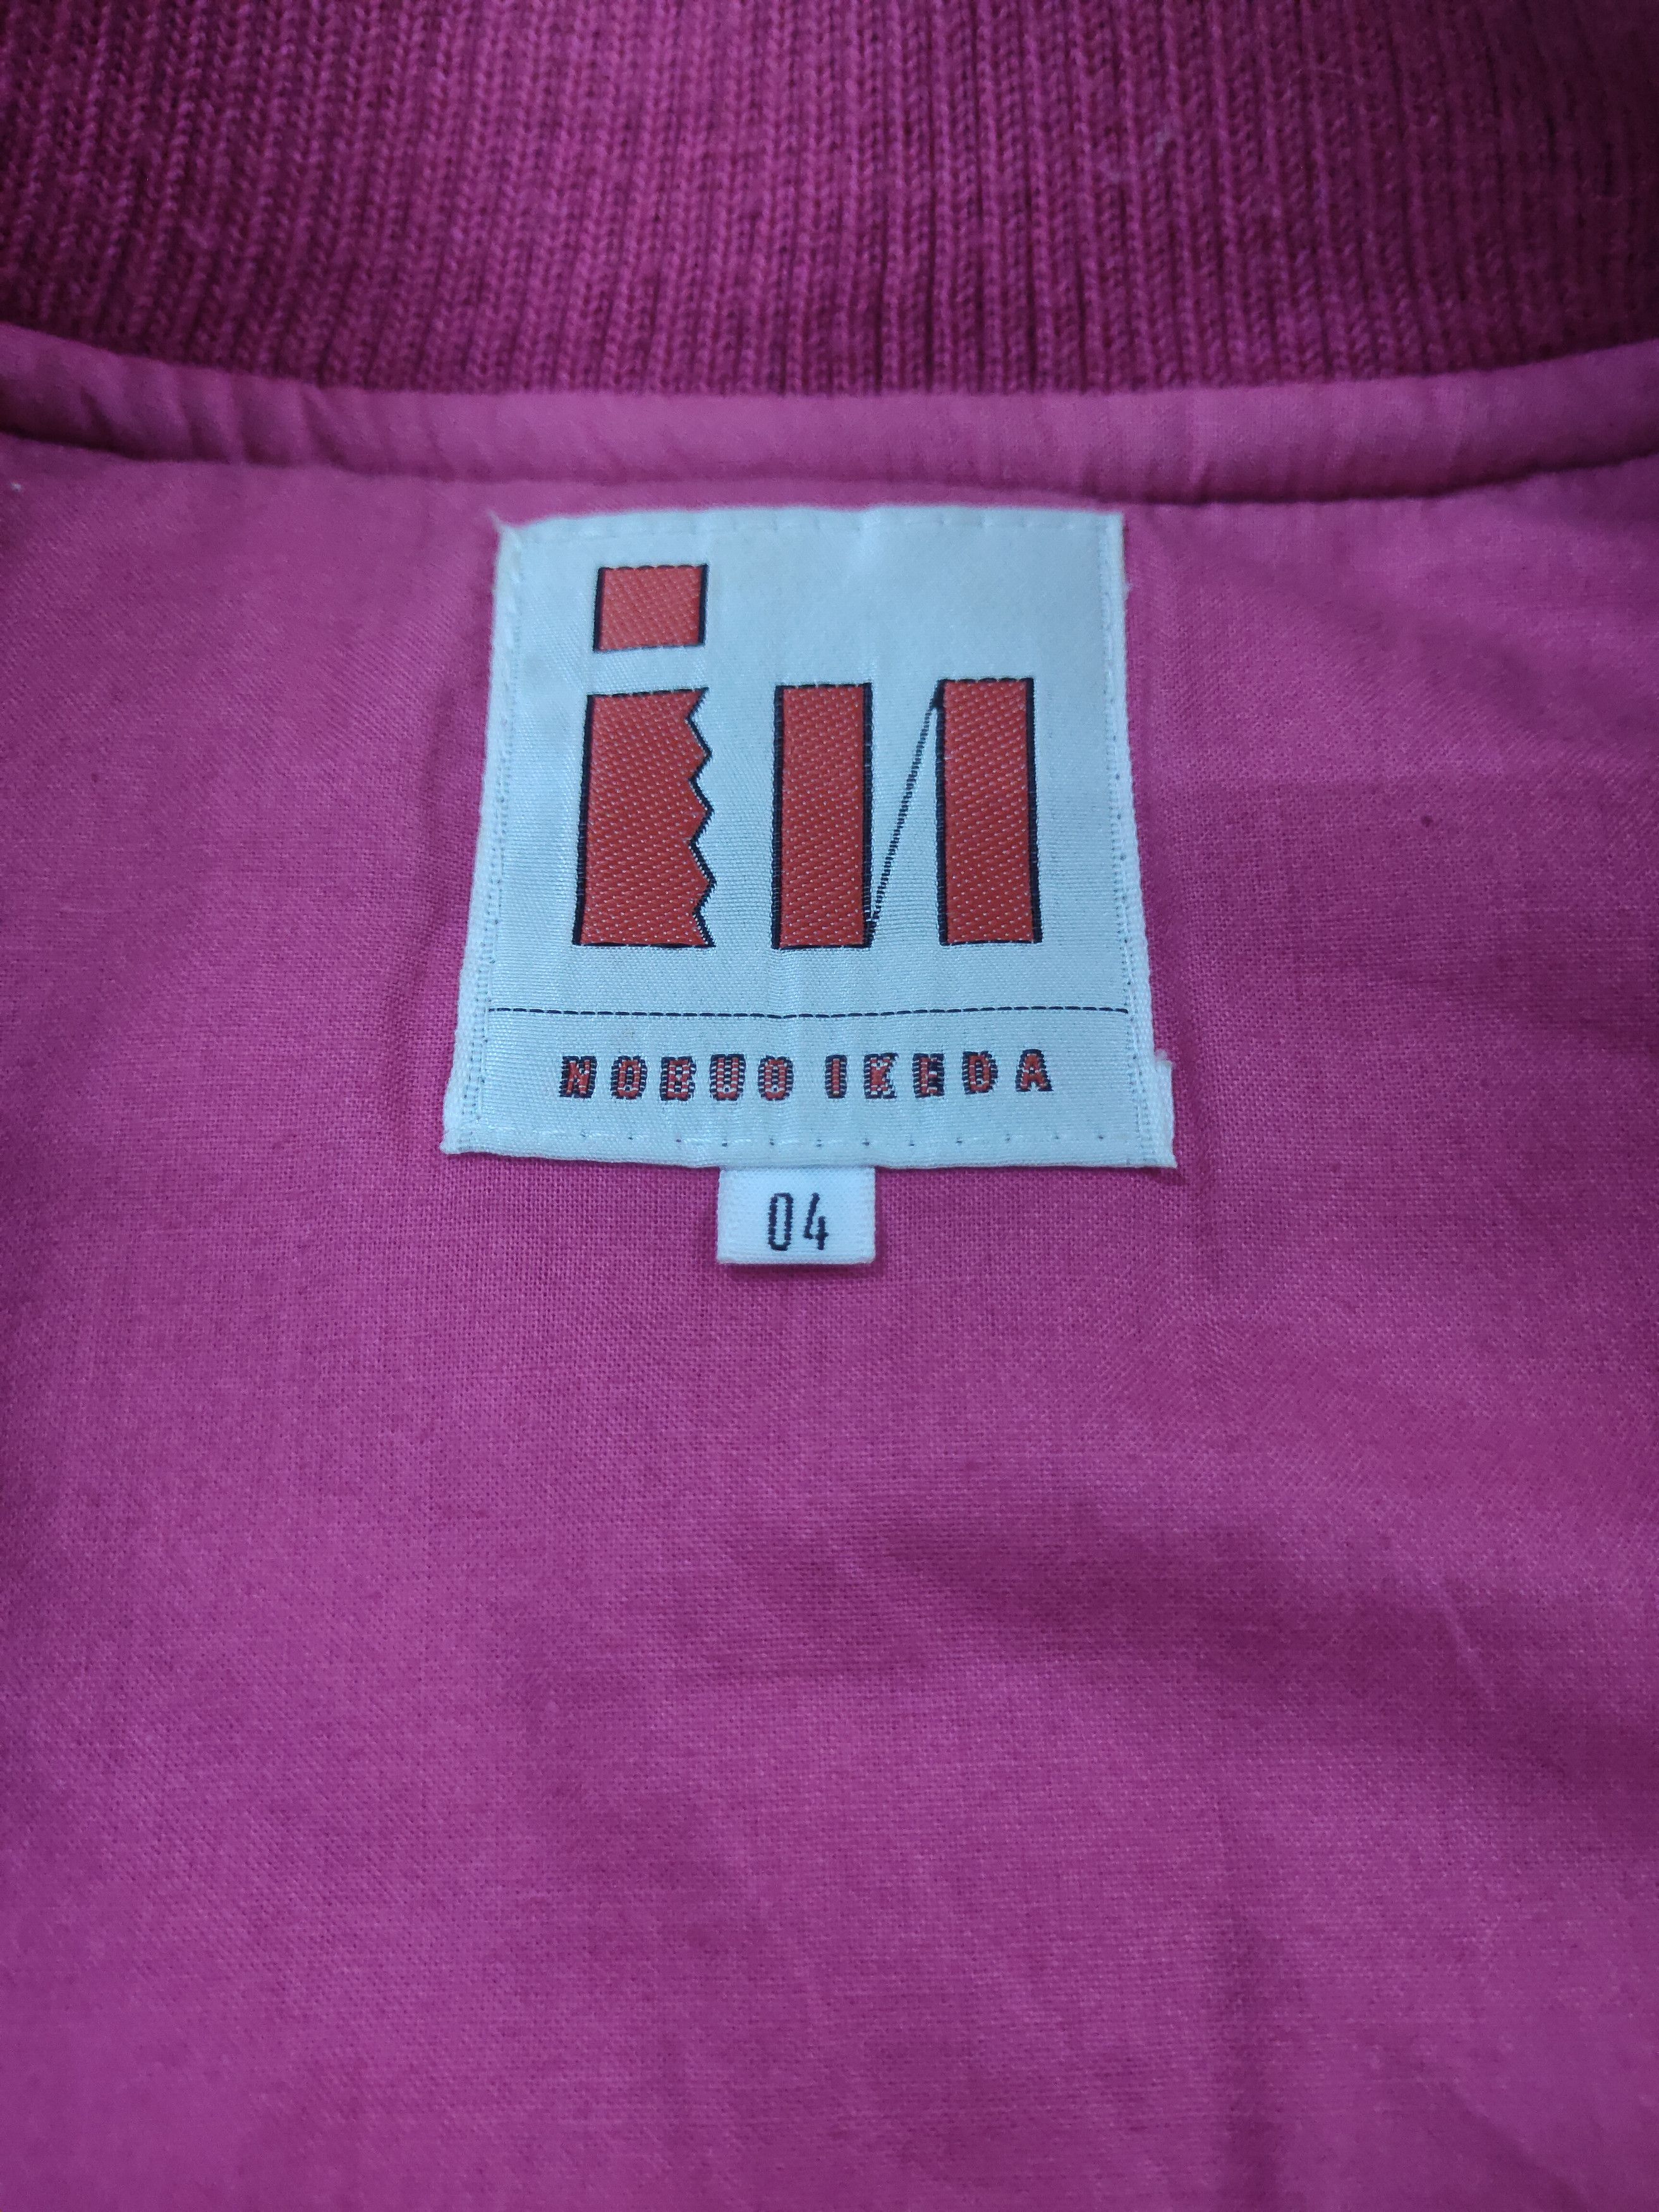 Japanese Brand I.N Express By Nubuo Ikeda Embroidery Navajo Wool Jacket Size US M / EU 48-50 / 2 - 3 Thumbnail